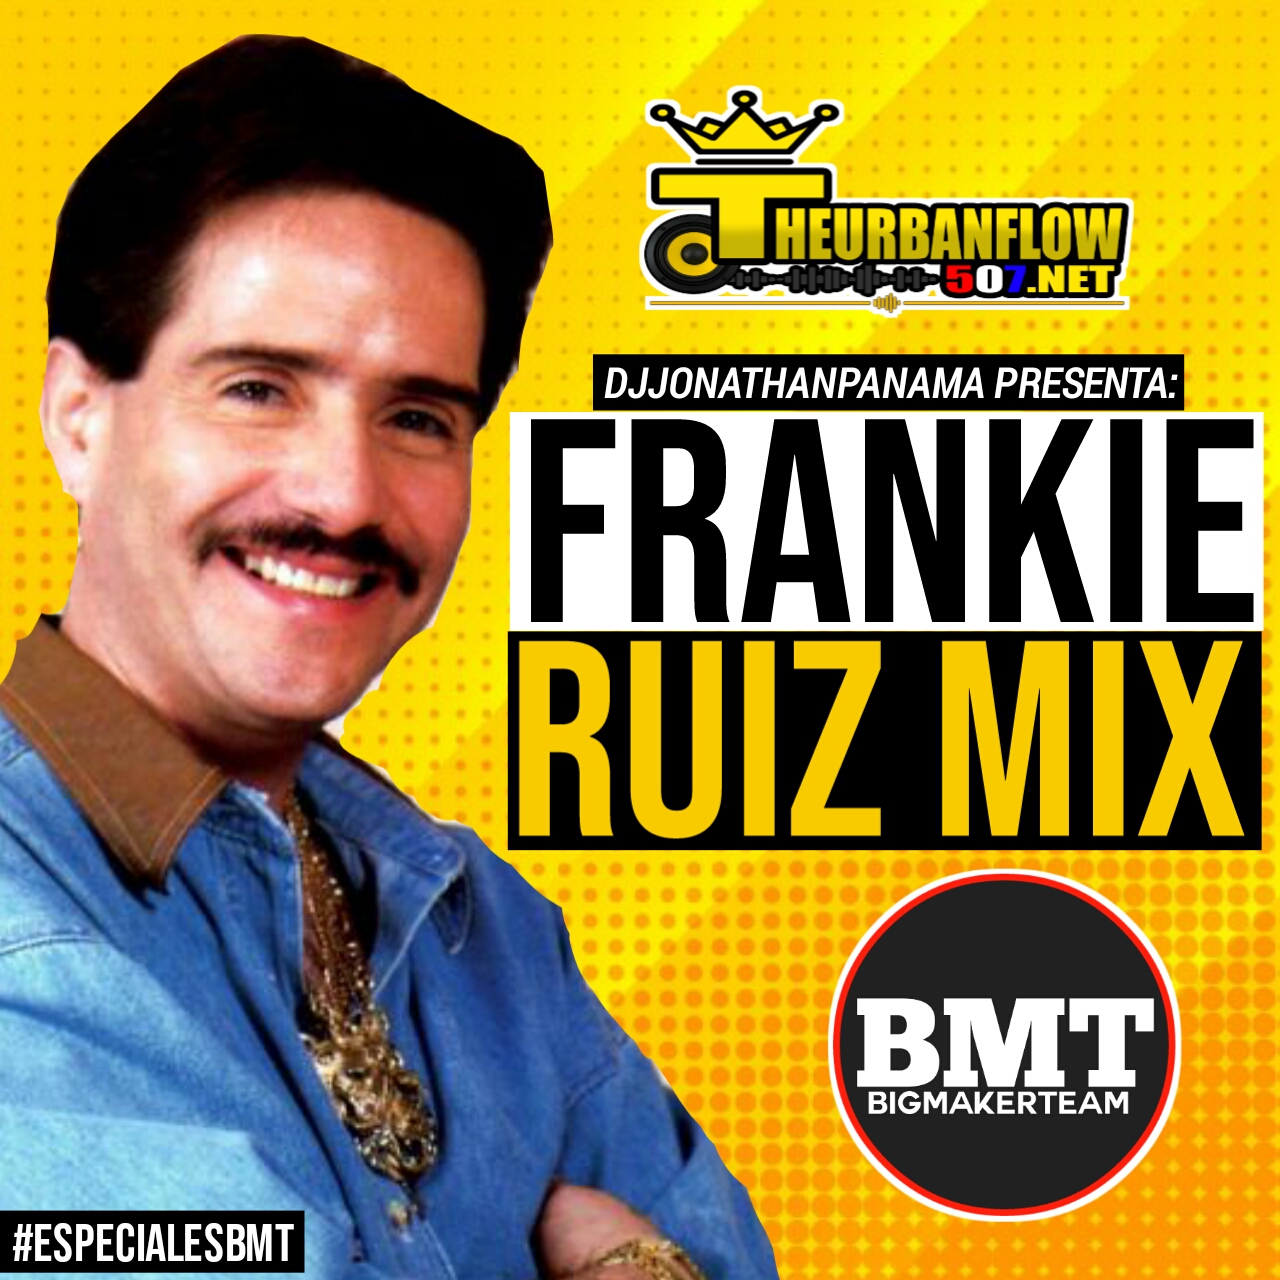 Frankie Ruiz Mix 2019 - @djjonathanpanama